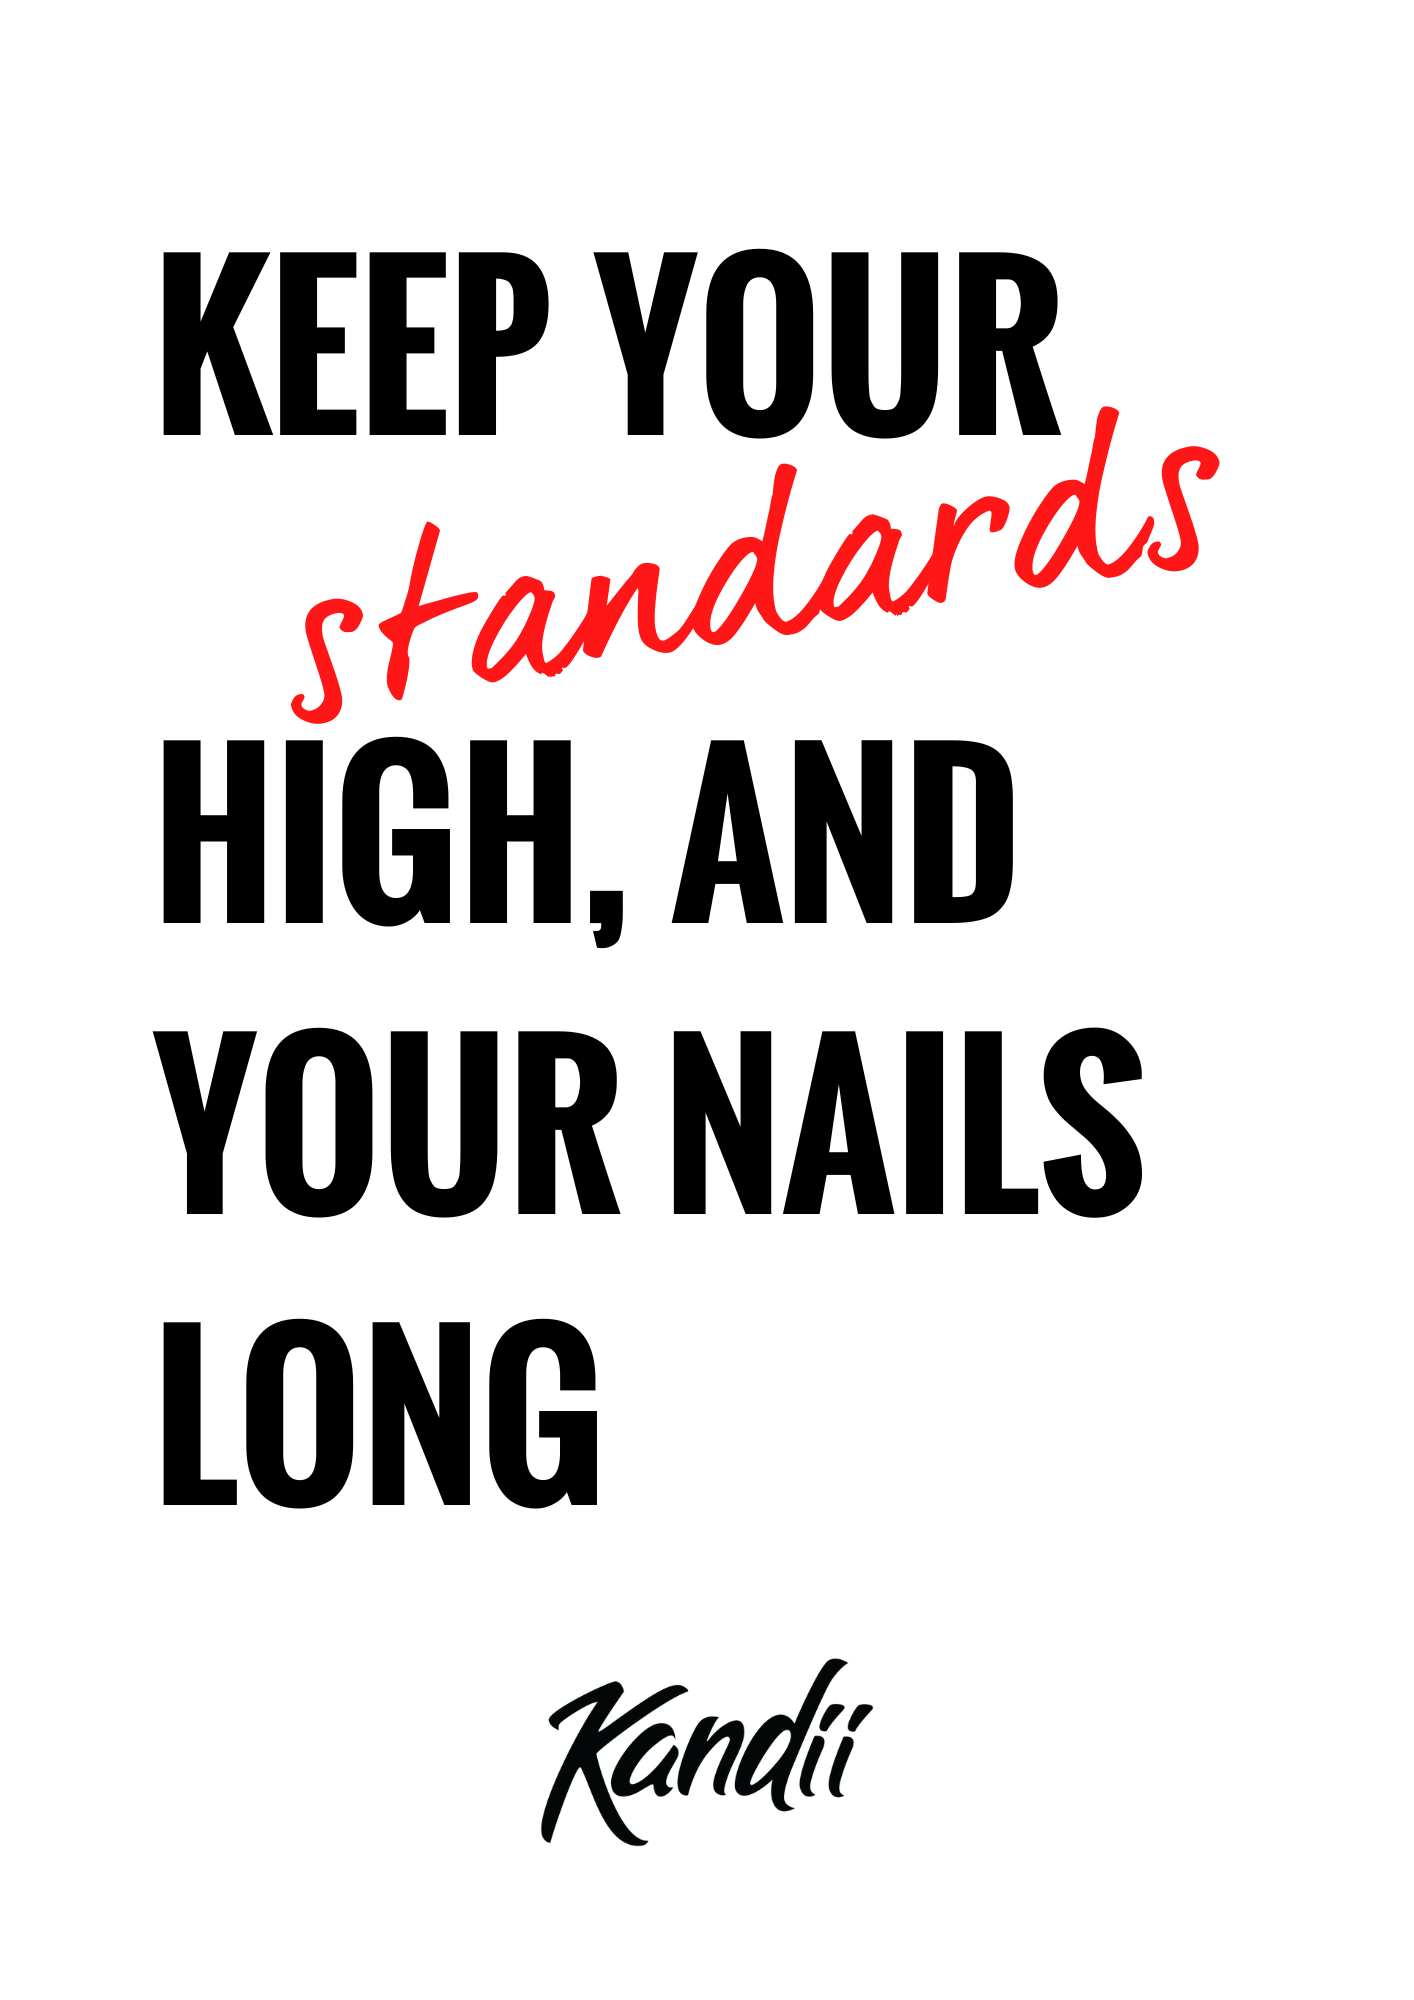 Kandii Posters - Håll dina standarder